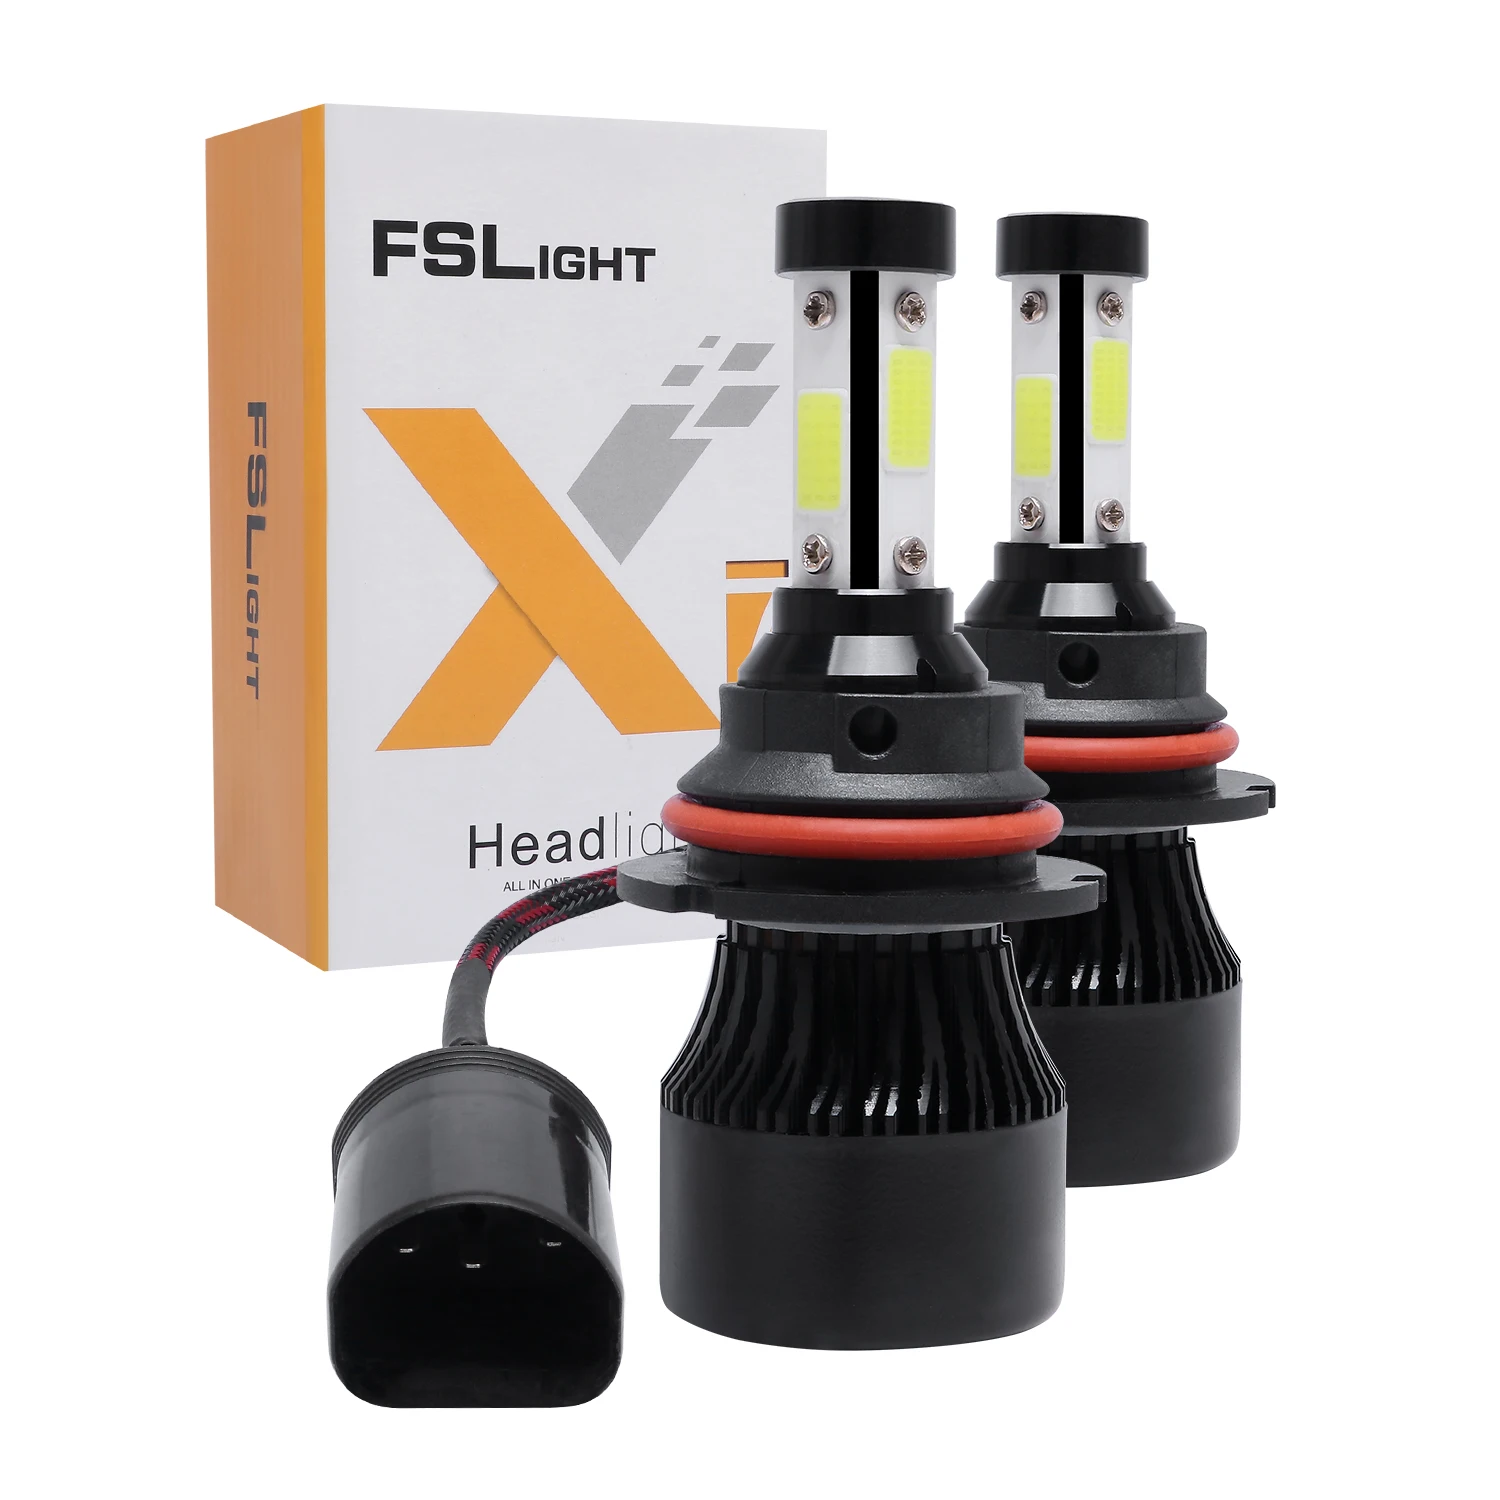 

9007 LED Headlight Bulbs Canbus 881 H1 9003 H4 HB2 HB4 9006 H8 H11 H7 H1 H3 H27 5202 HB4 9005 HB3 880 h9 LED DRL Fog Lamp Lights